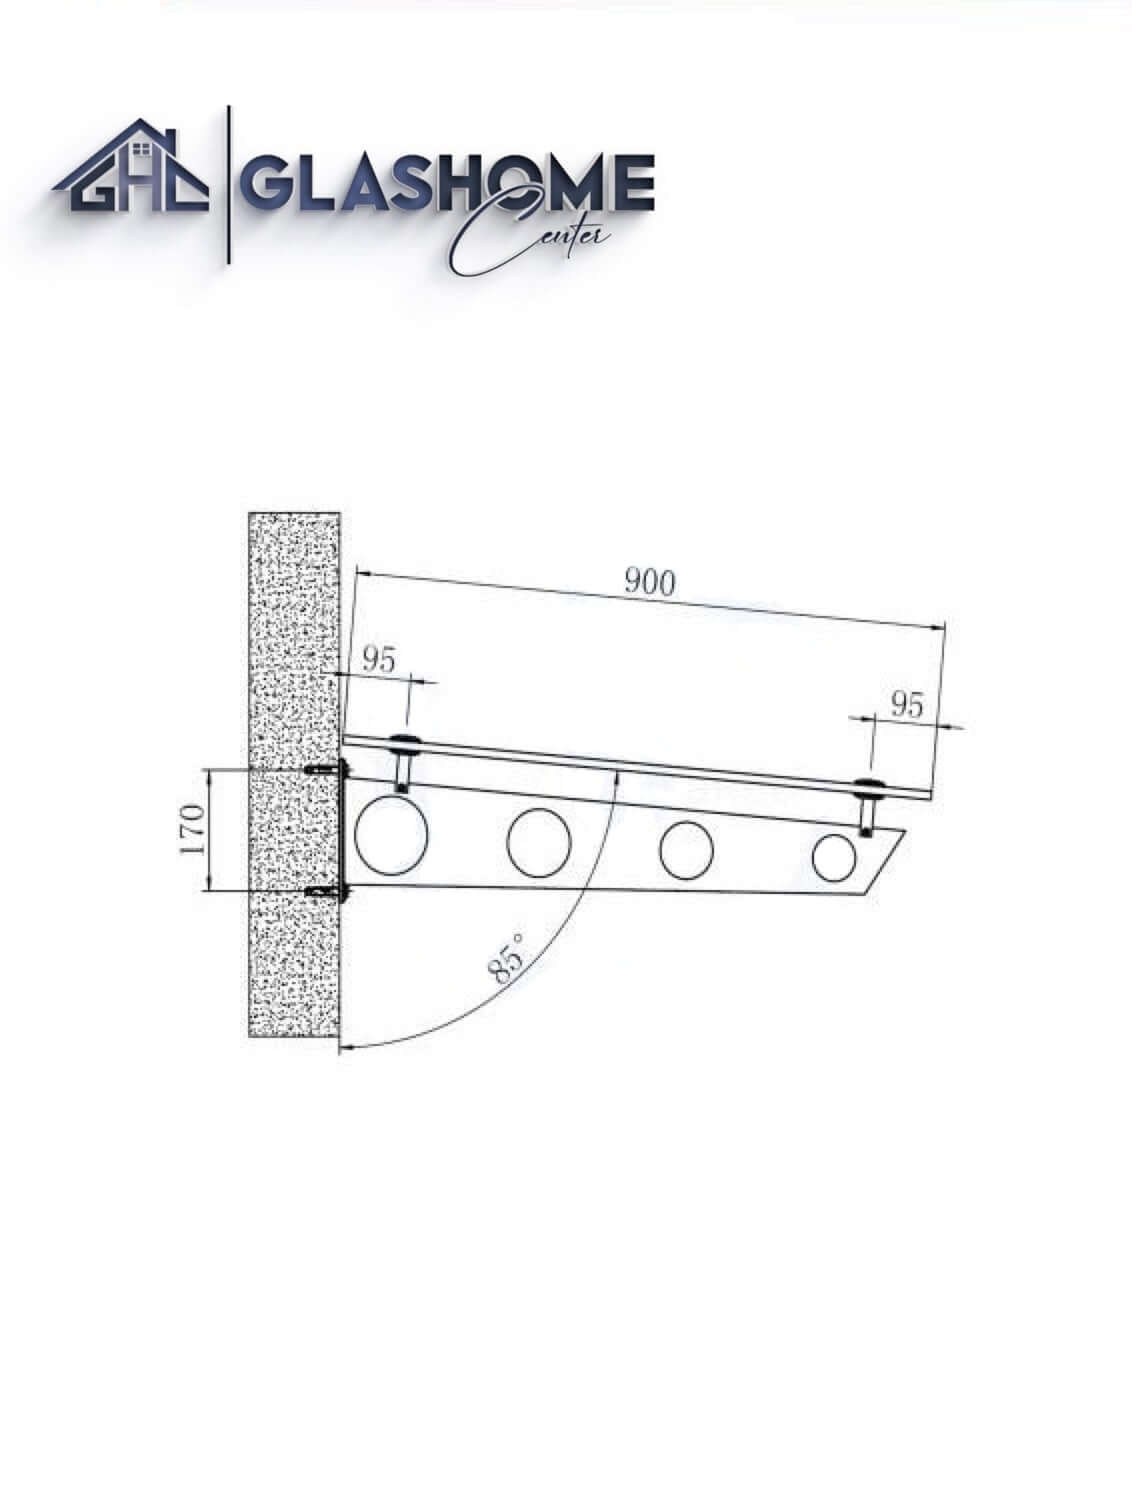 GlasHomeCenter - glass canopy - Clear glass - 200x90cm - 13.1mm VSG - incl. 2 schwarze Edelstahlhalterungen Variante "Stockholm"